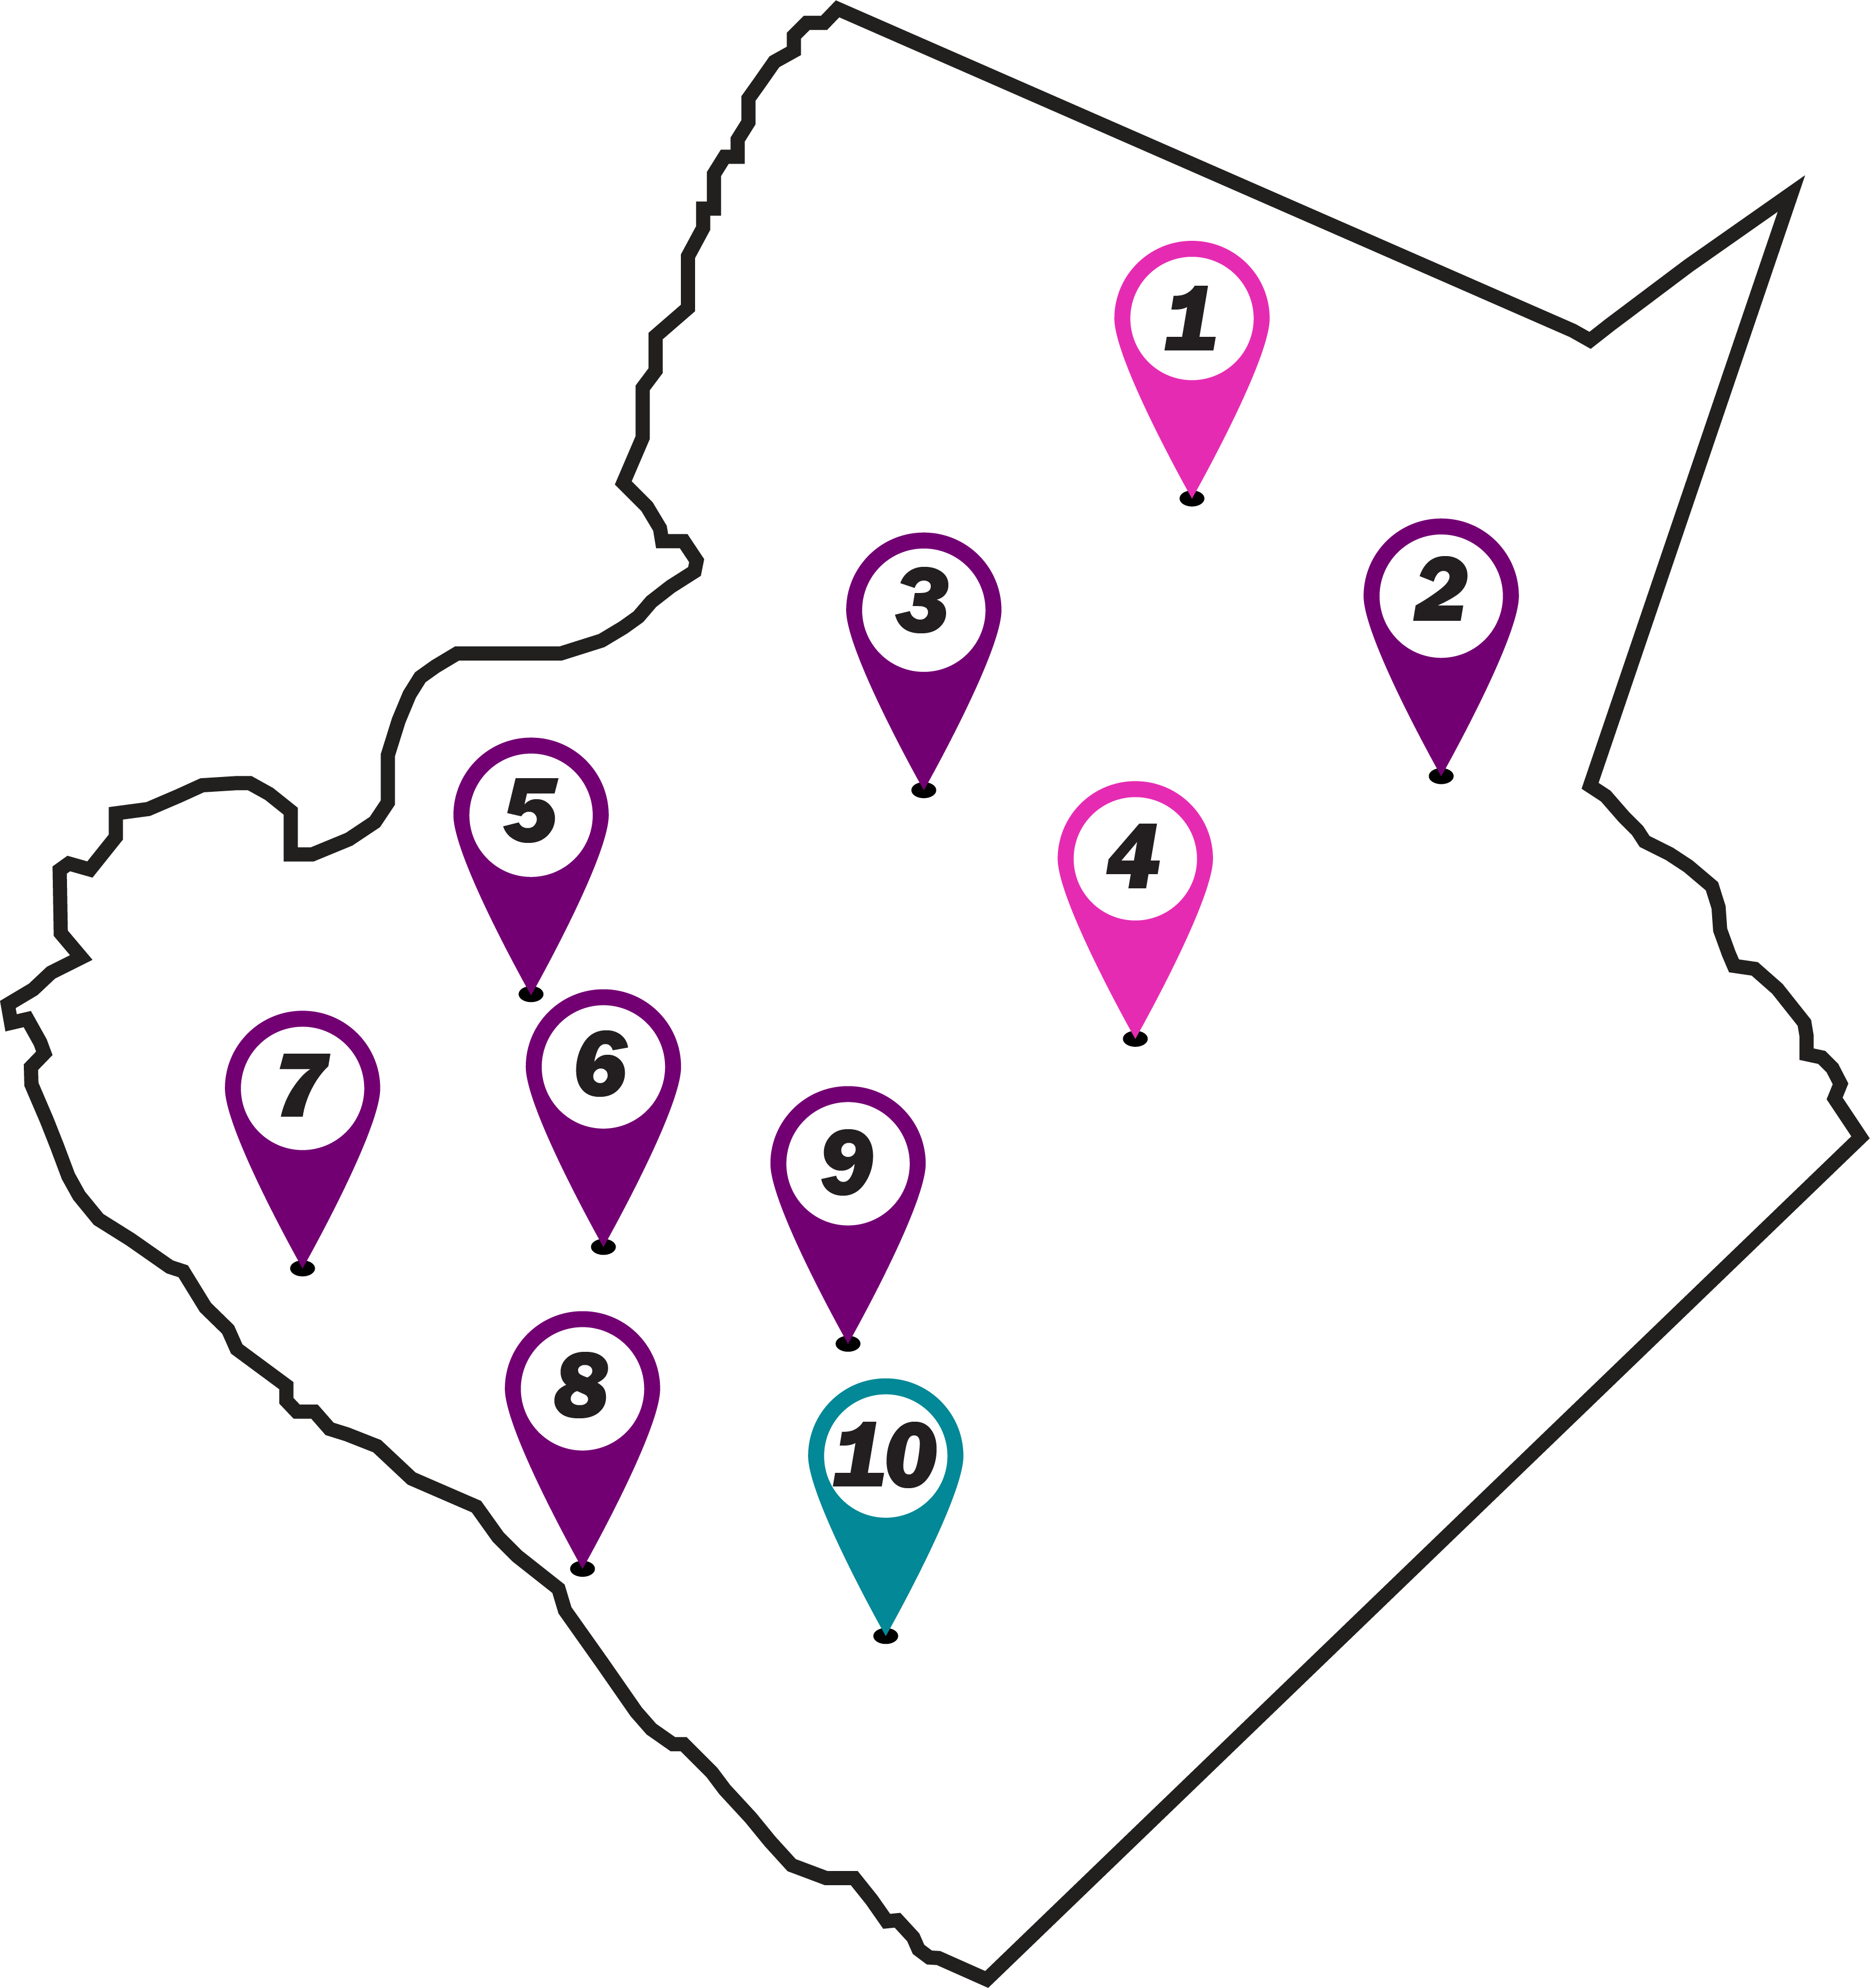 map of tag renewal kiosks in Gwinnett County